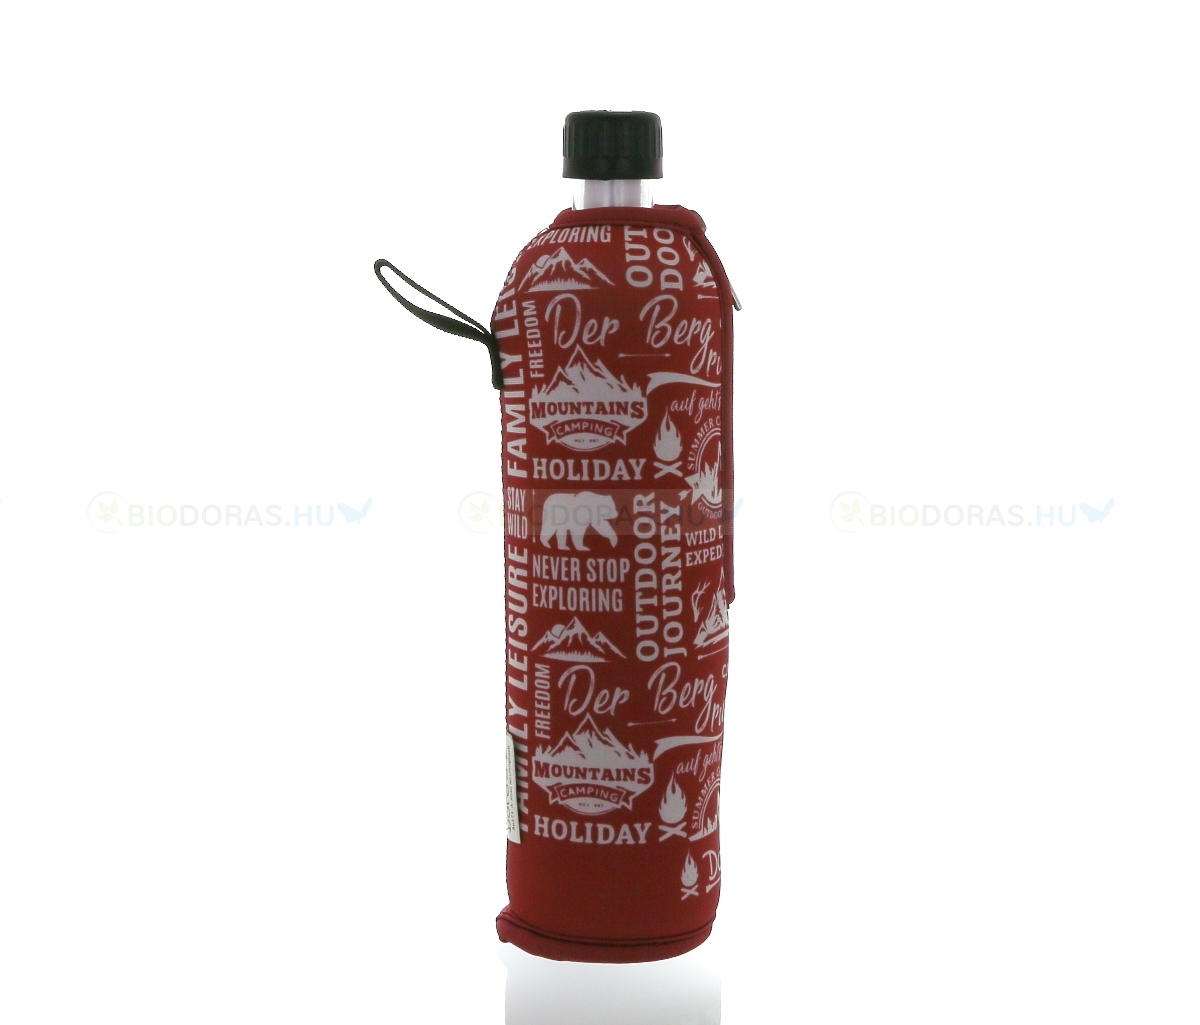 DORAS Üvegkulacs (üvegpalack) piros, túra motívumos neoprén huzattal - 500 ml